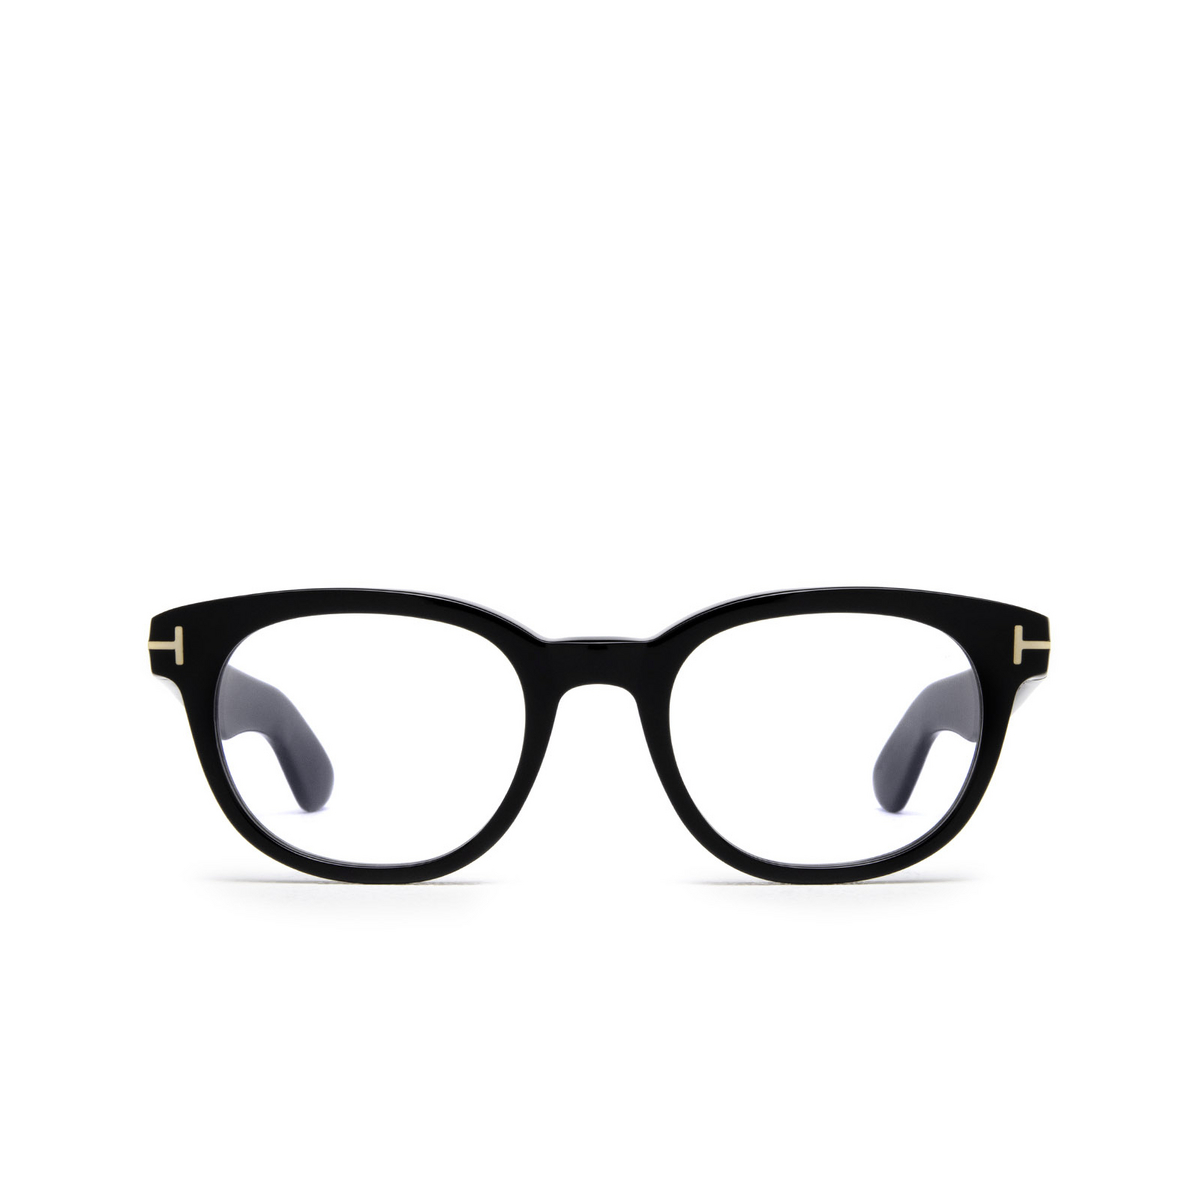 Tom Ford® Square Eyeglasses: FT5807-B color Black 001 - front view.